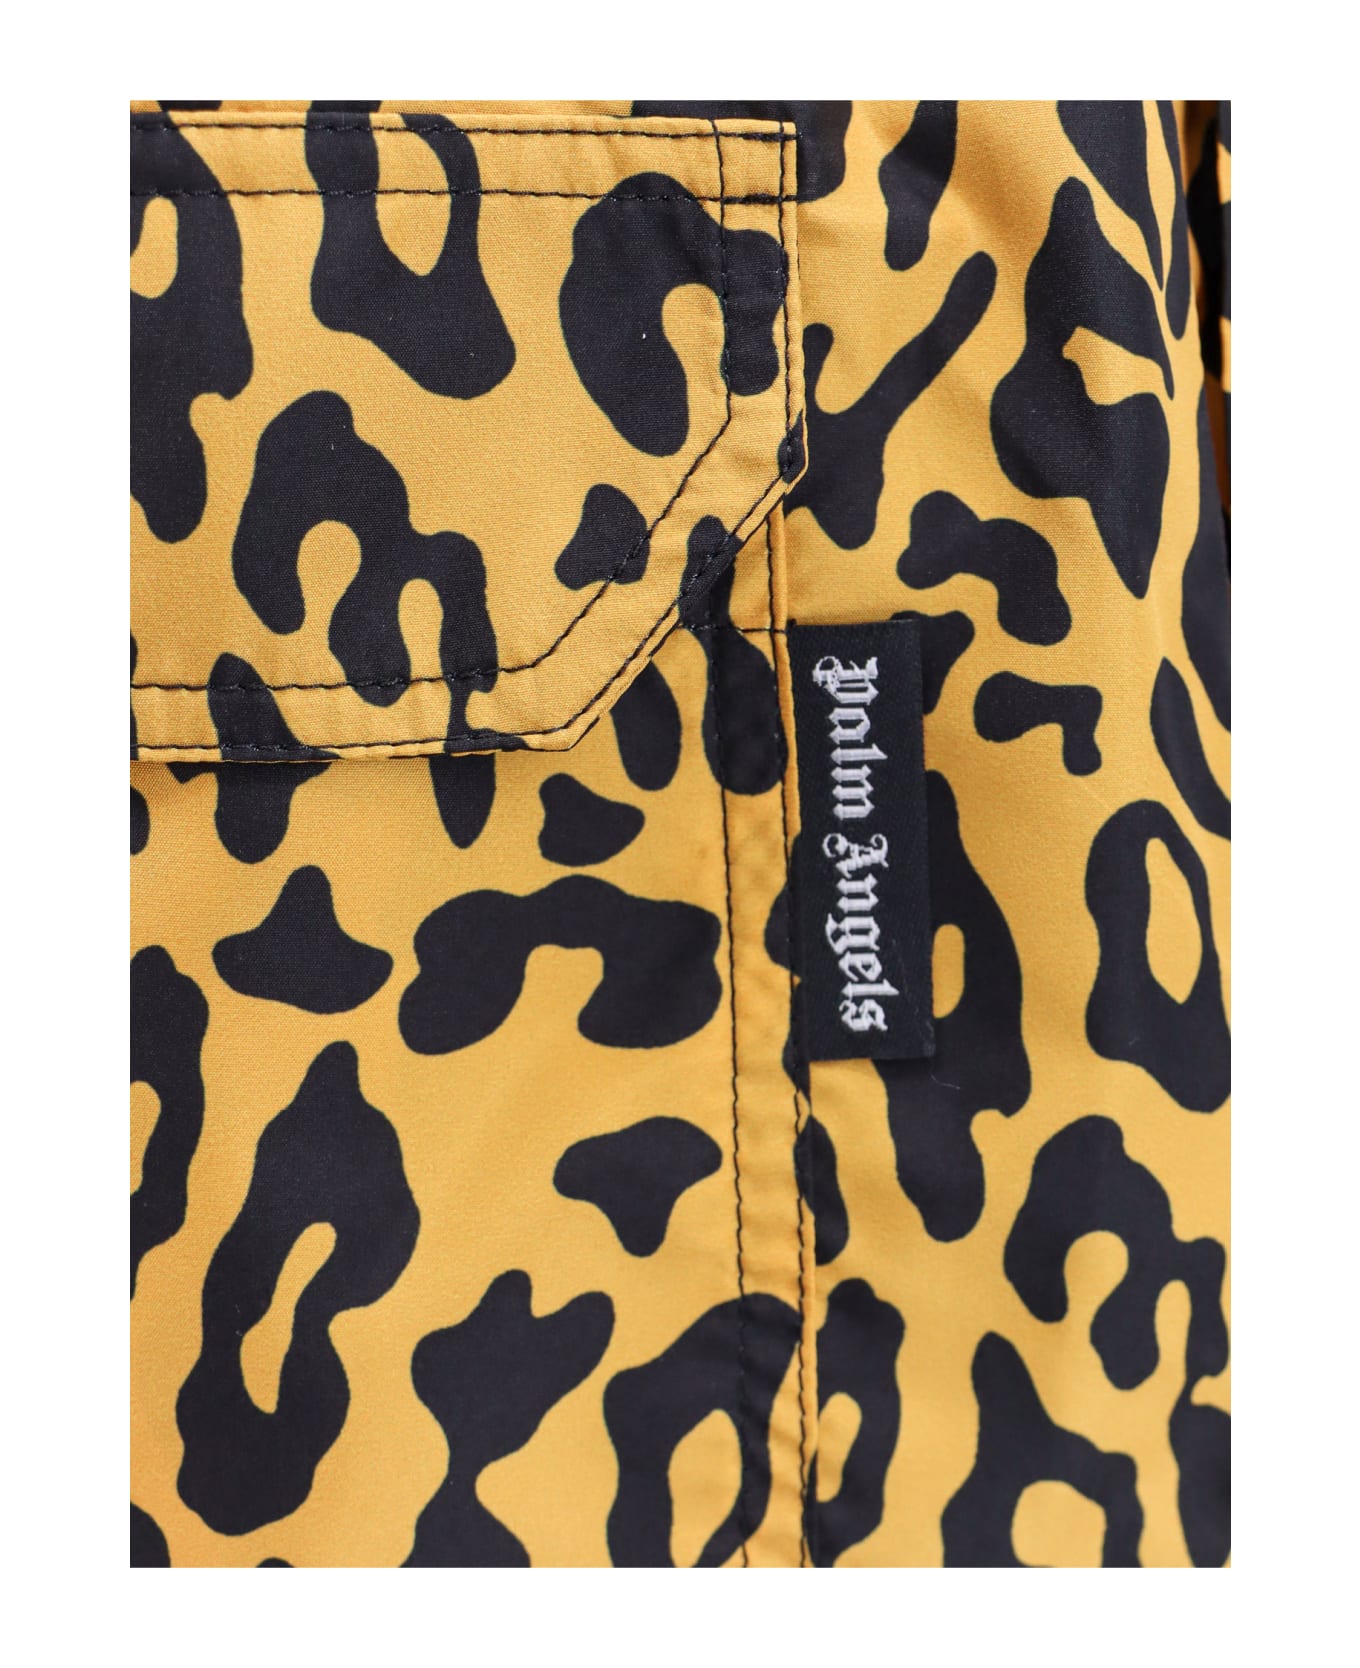 Palm Angels Cheetah Print Drawstring Swim Shorts - Orange 水着